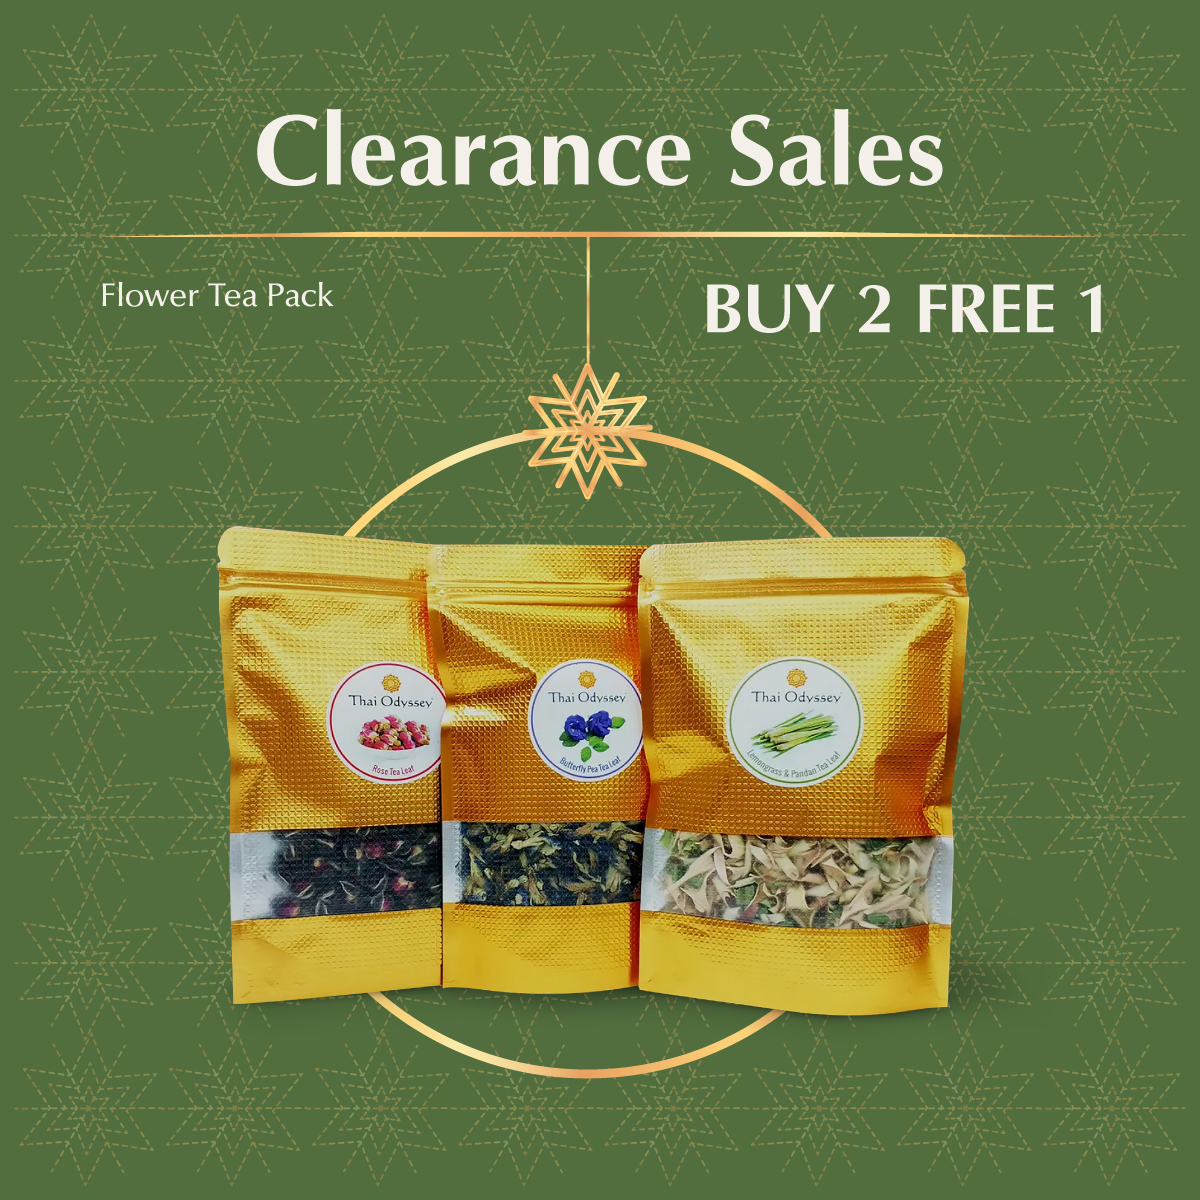 TO-Clearance-Sales-Flower-Tea-Pack.jpg